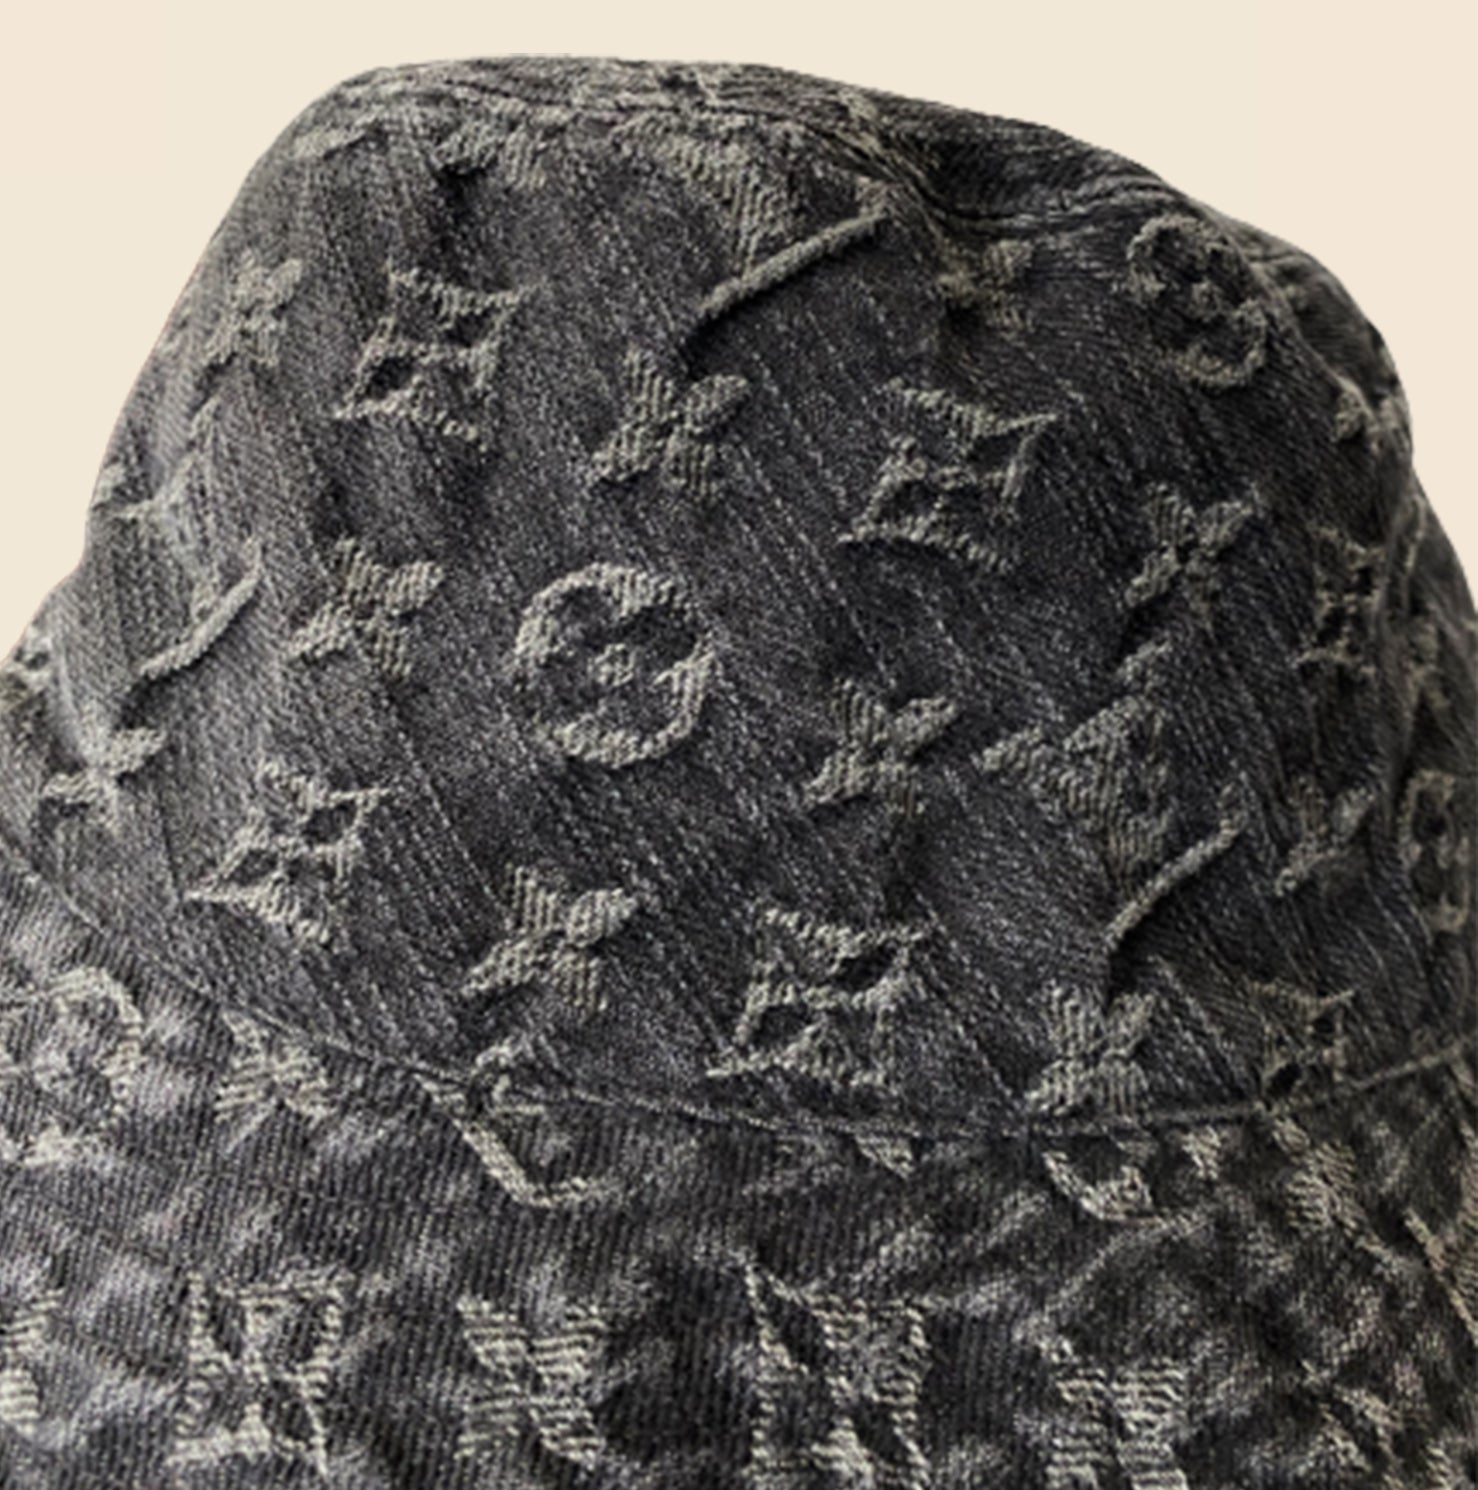 Louis Vuitton Monogram Denim Bucket Hat Bobbygram Cap Rare Jean Sun Visor 1lk31